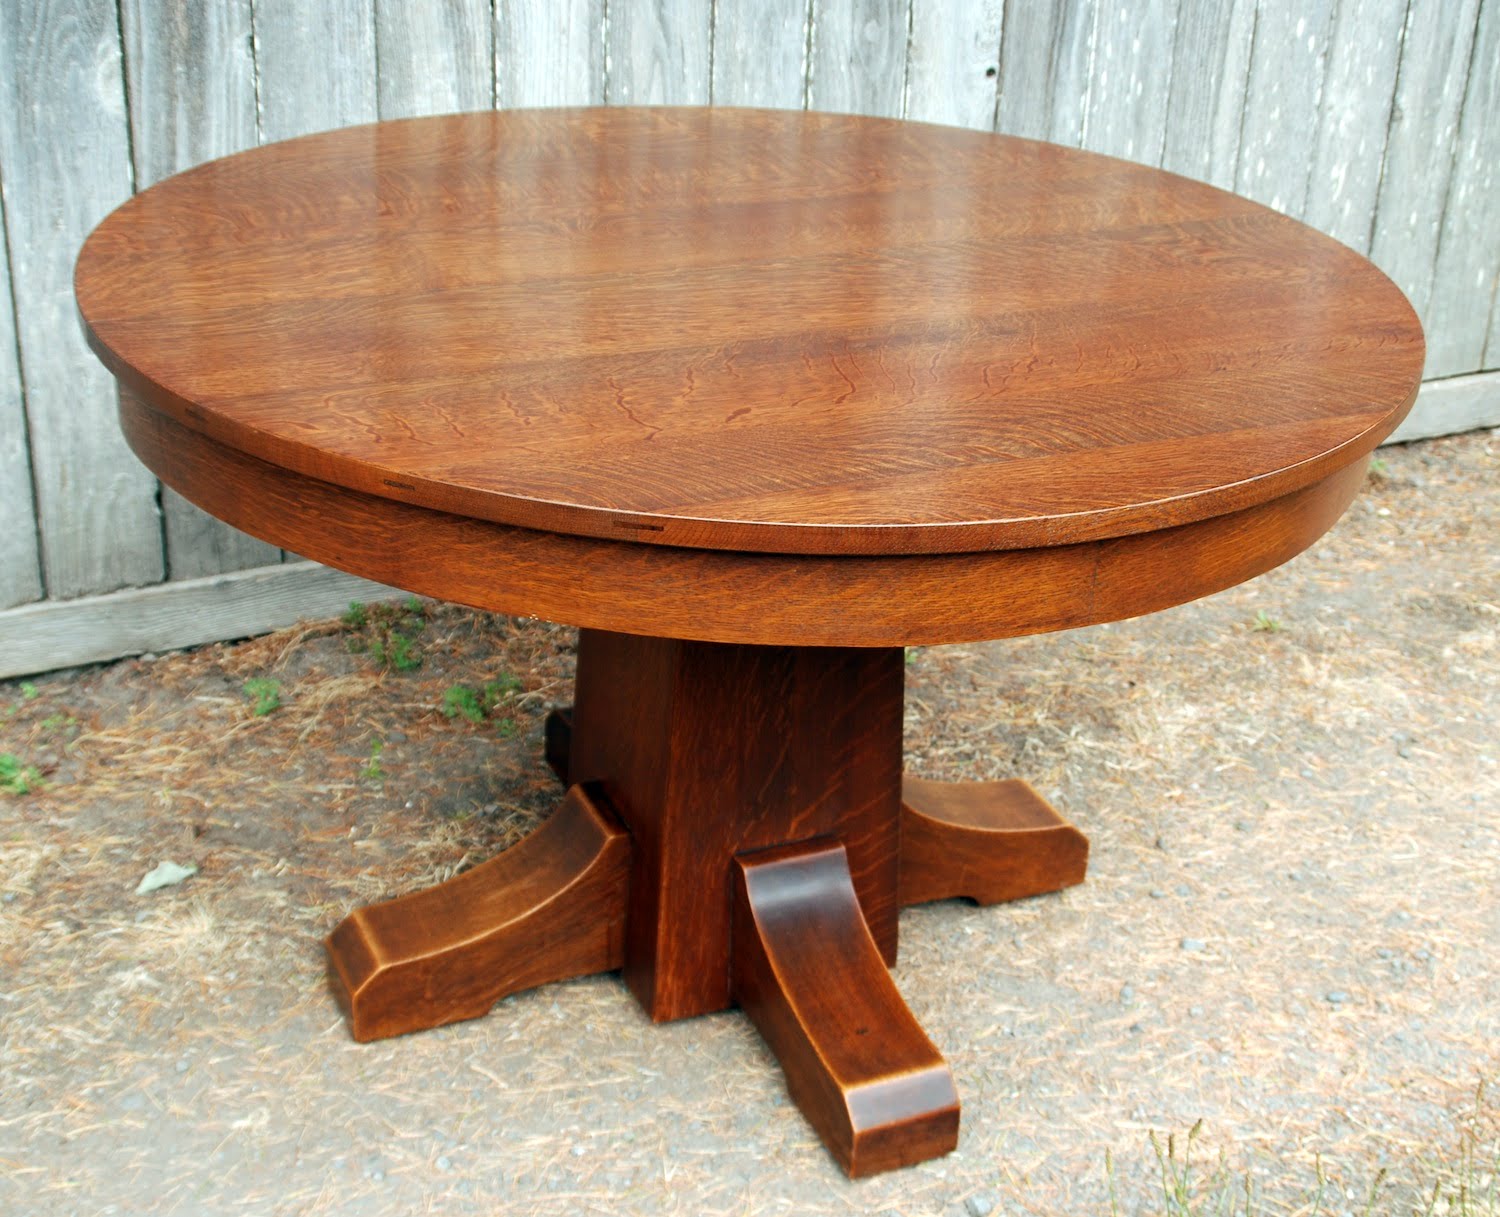 Voorhees Craftsman Mission Oak Furniture Original L J G Stickley 42 Inch Dining Table With 4 Original Leaves Signed